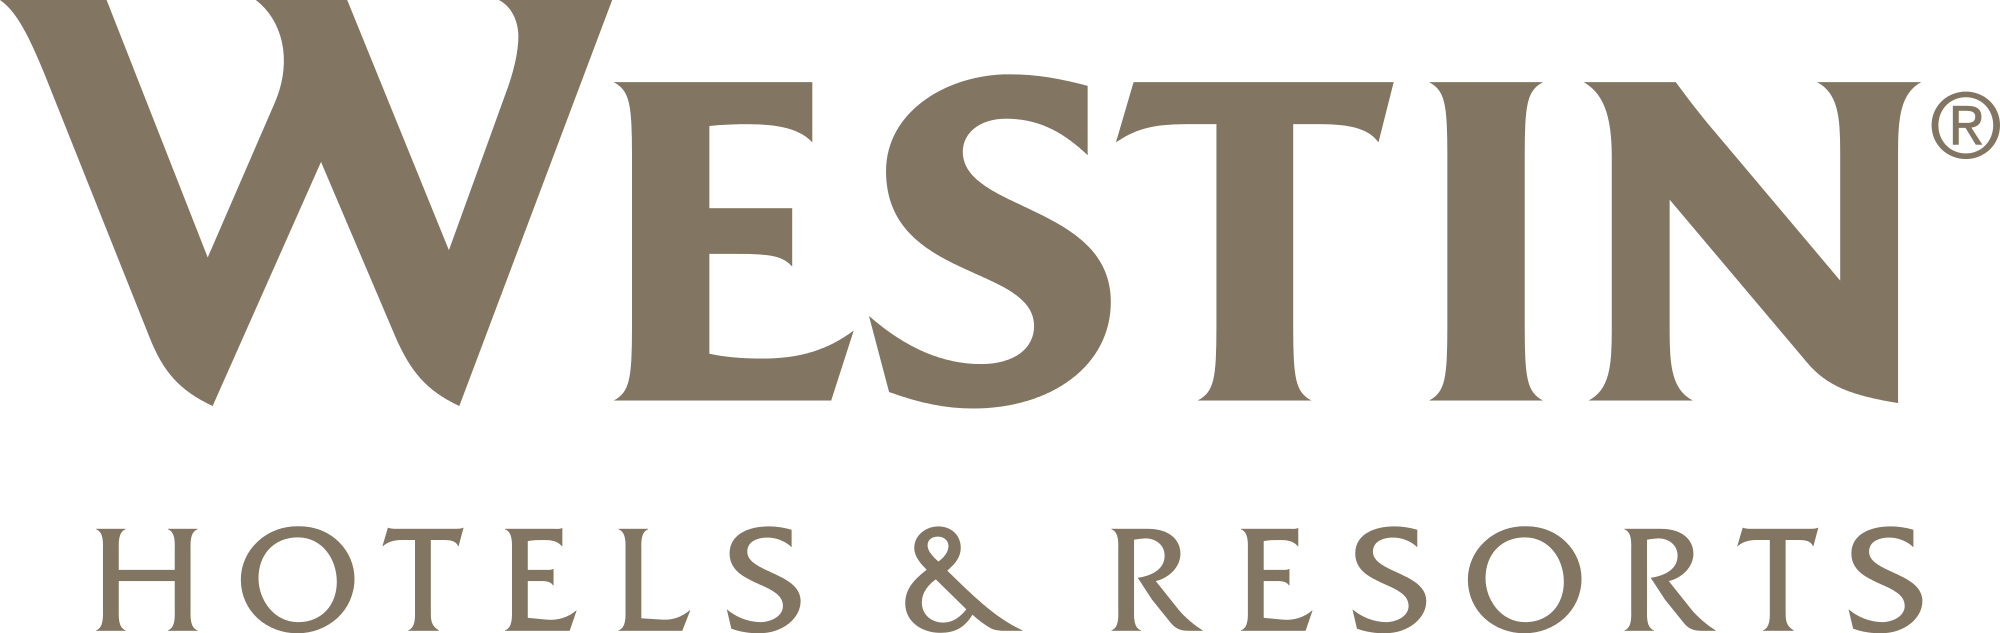 Westin_Hotels_&_Resorts_logo.svg.png